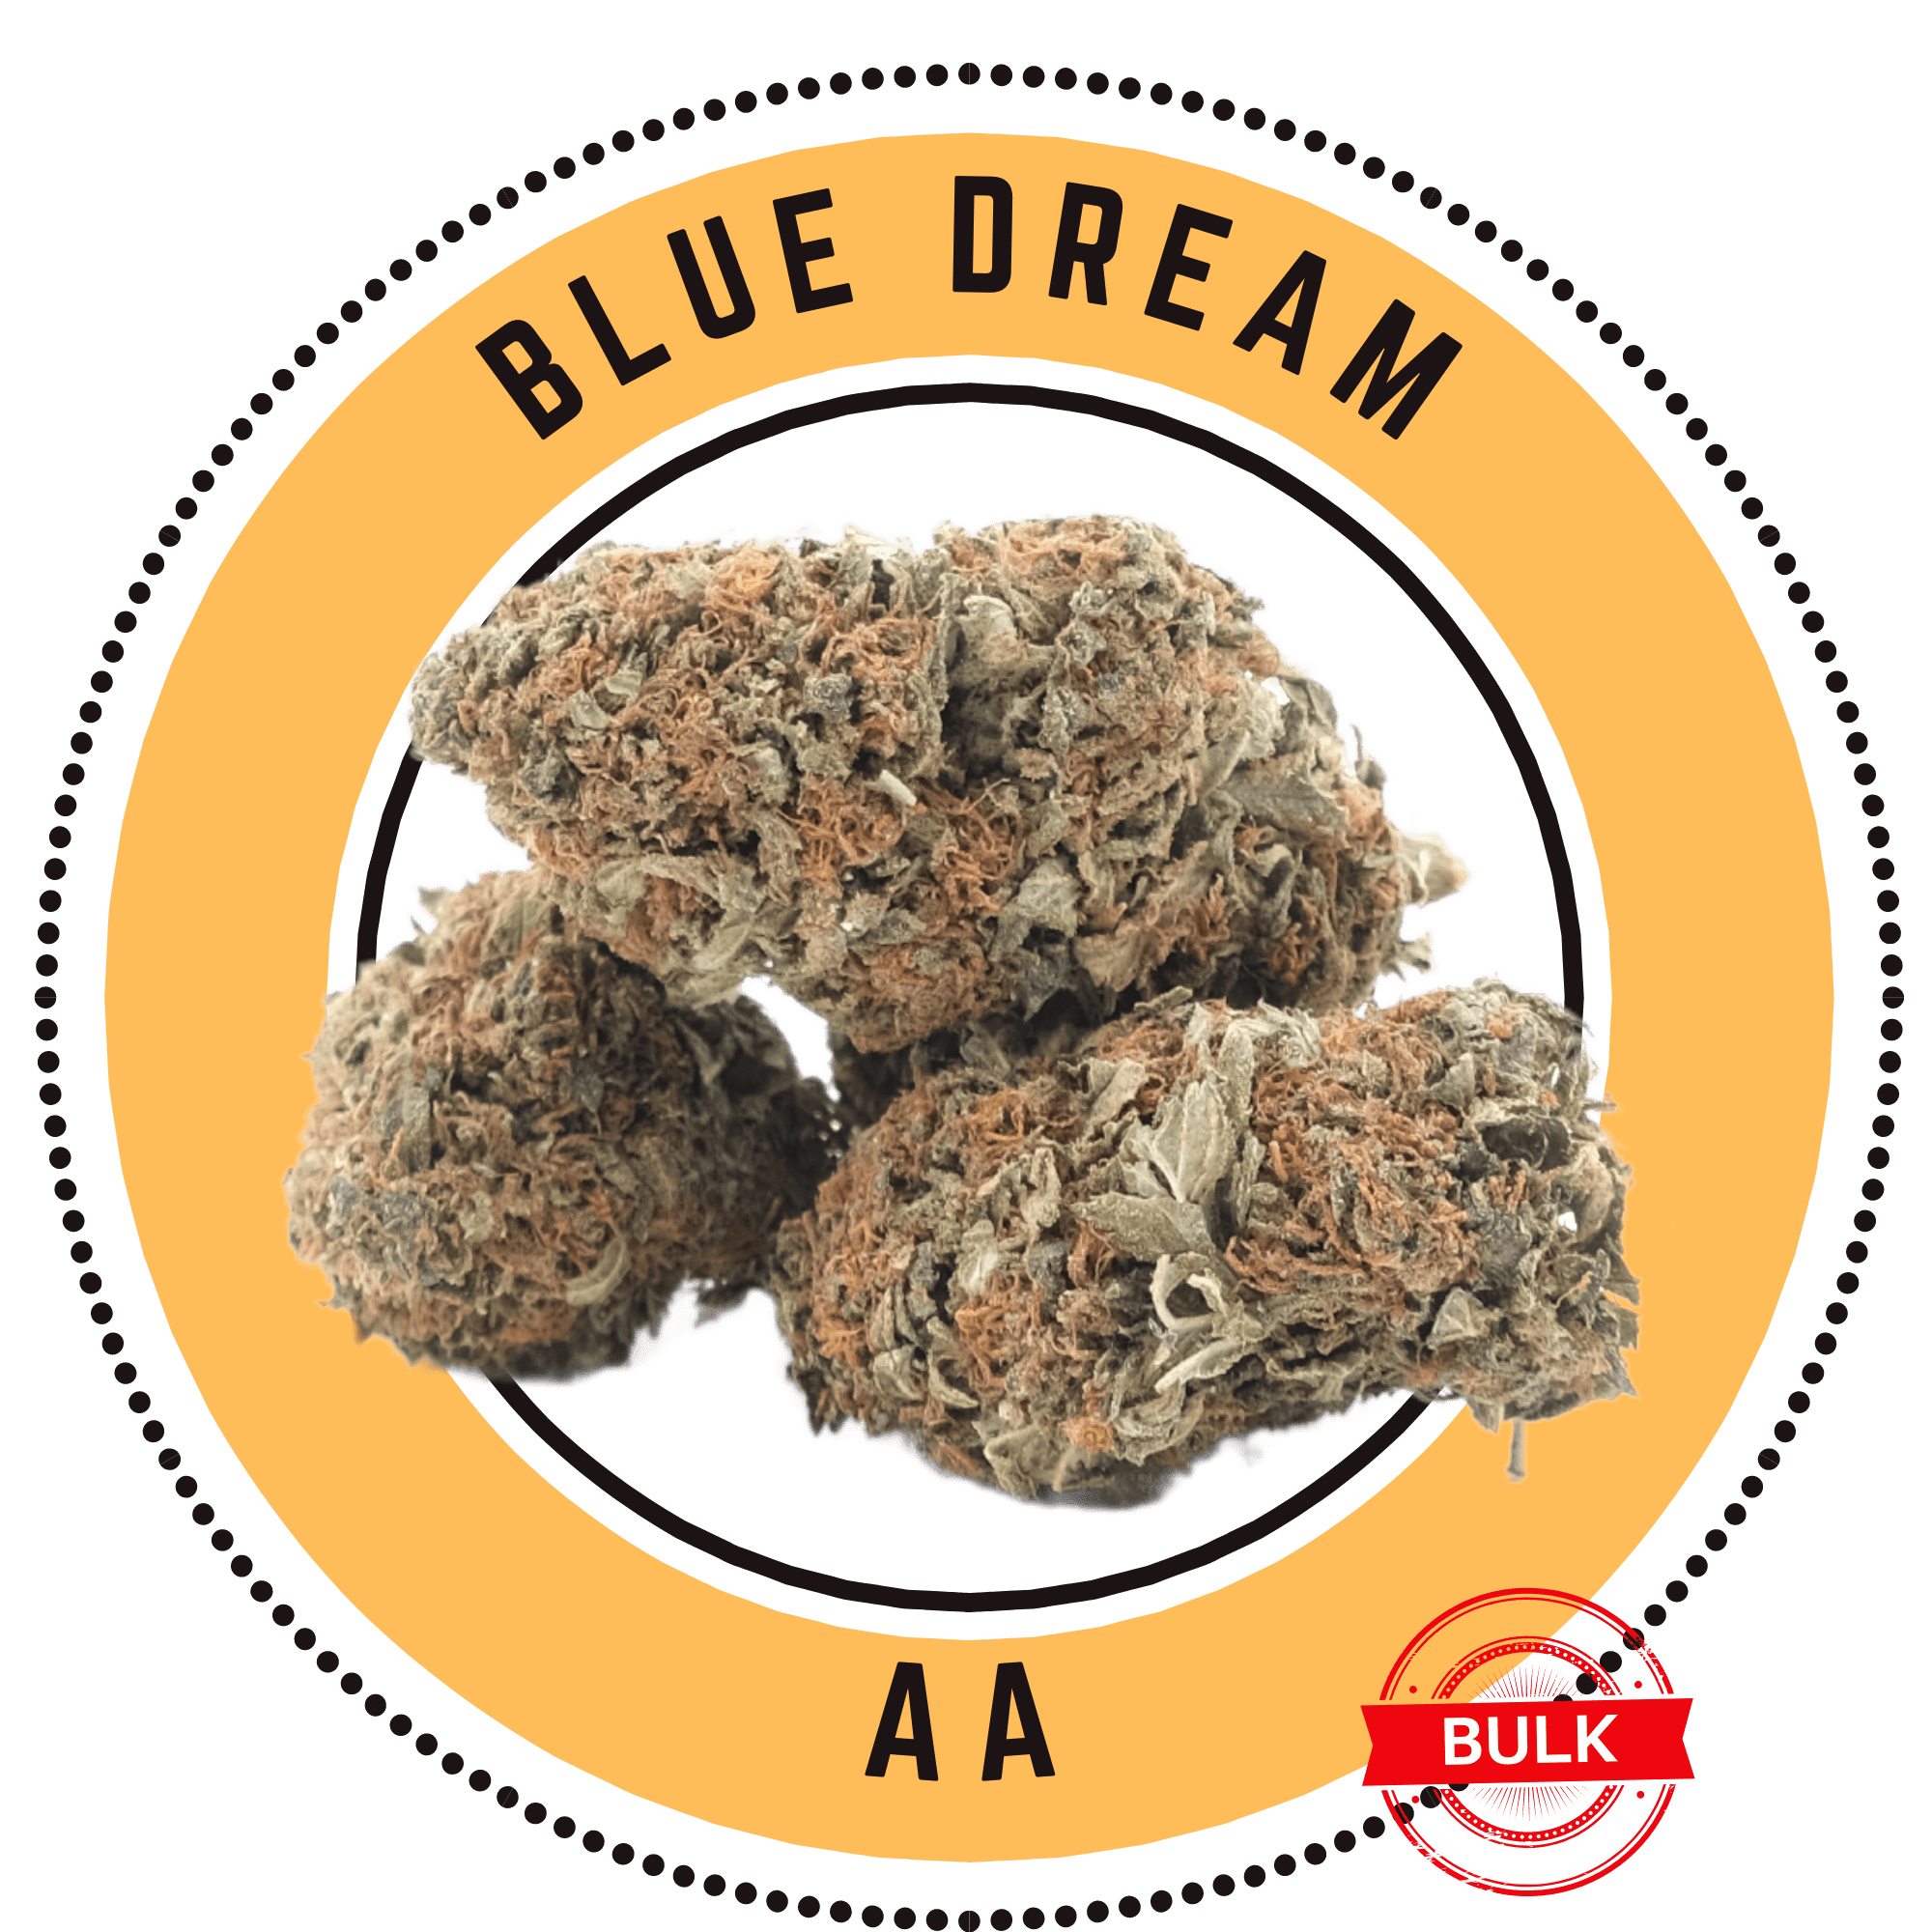 bluedream bulk feb